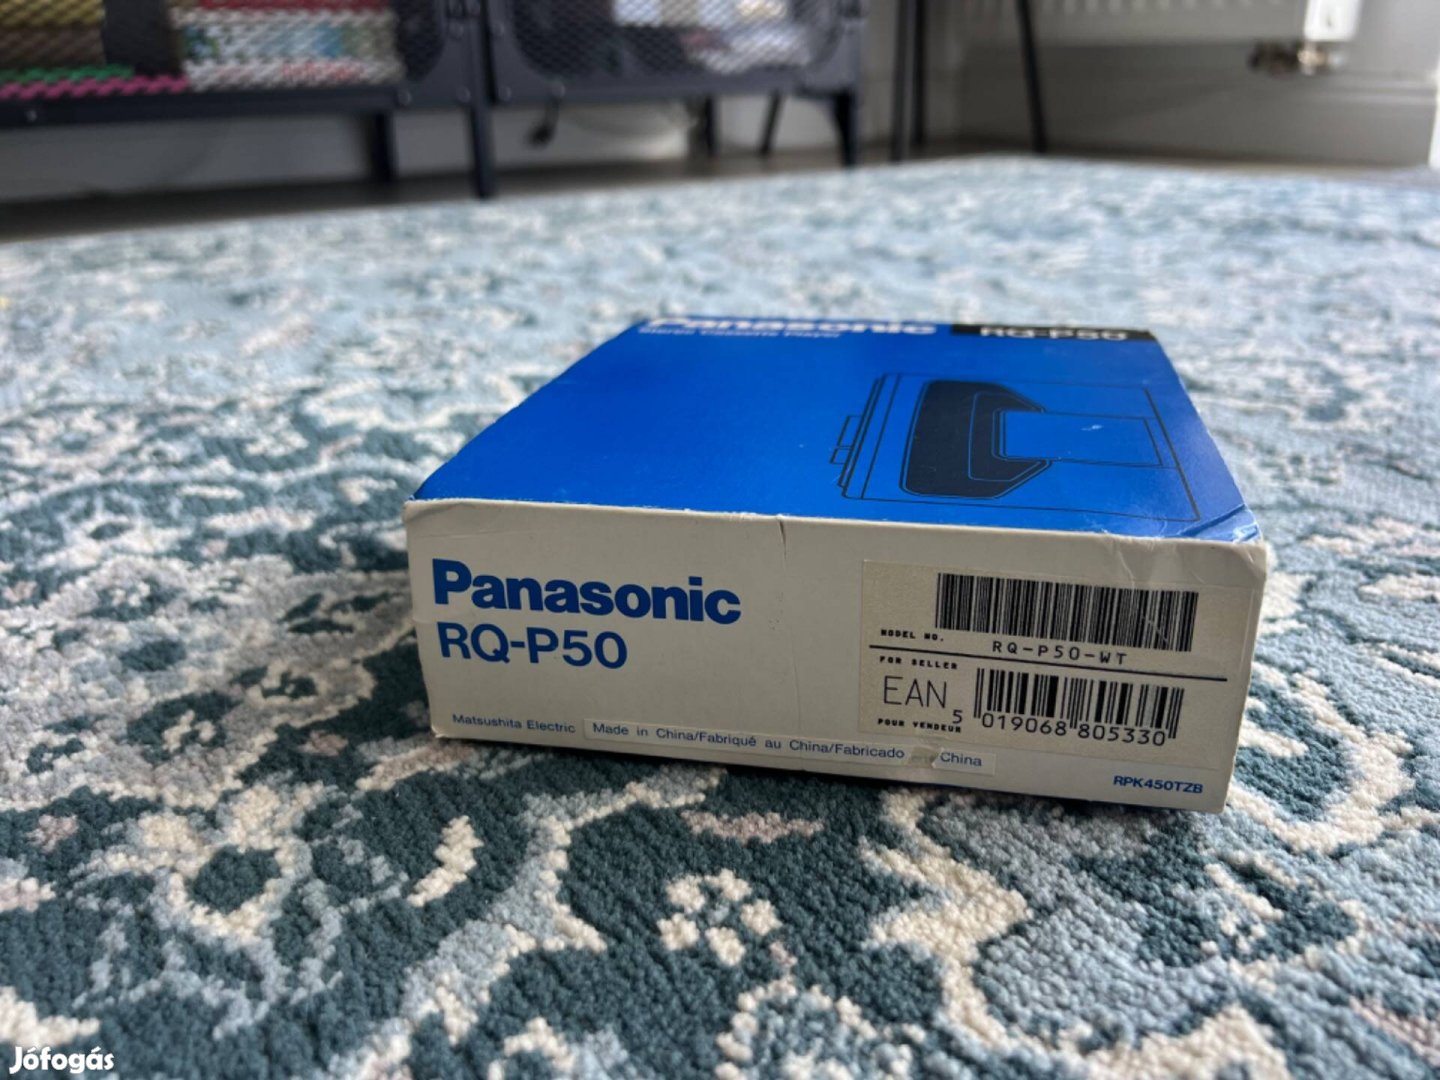 Panasonic rq-p50 walkman